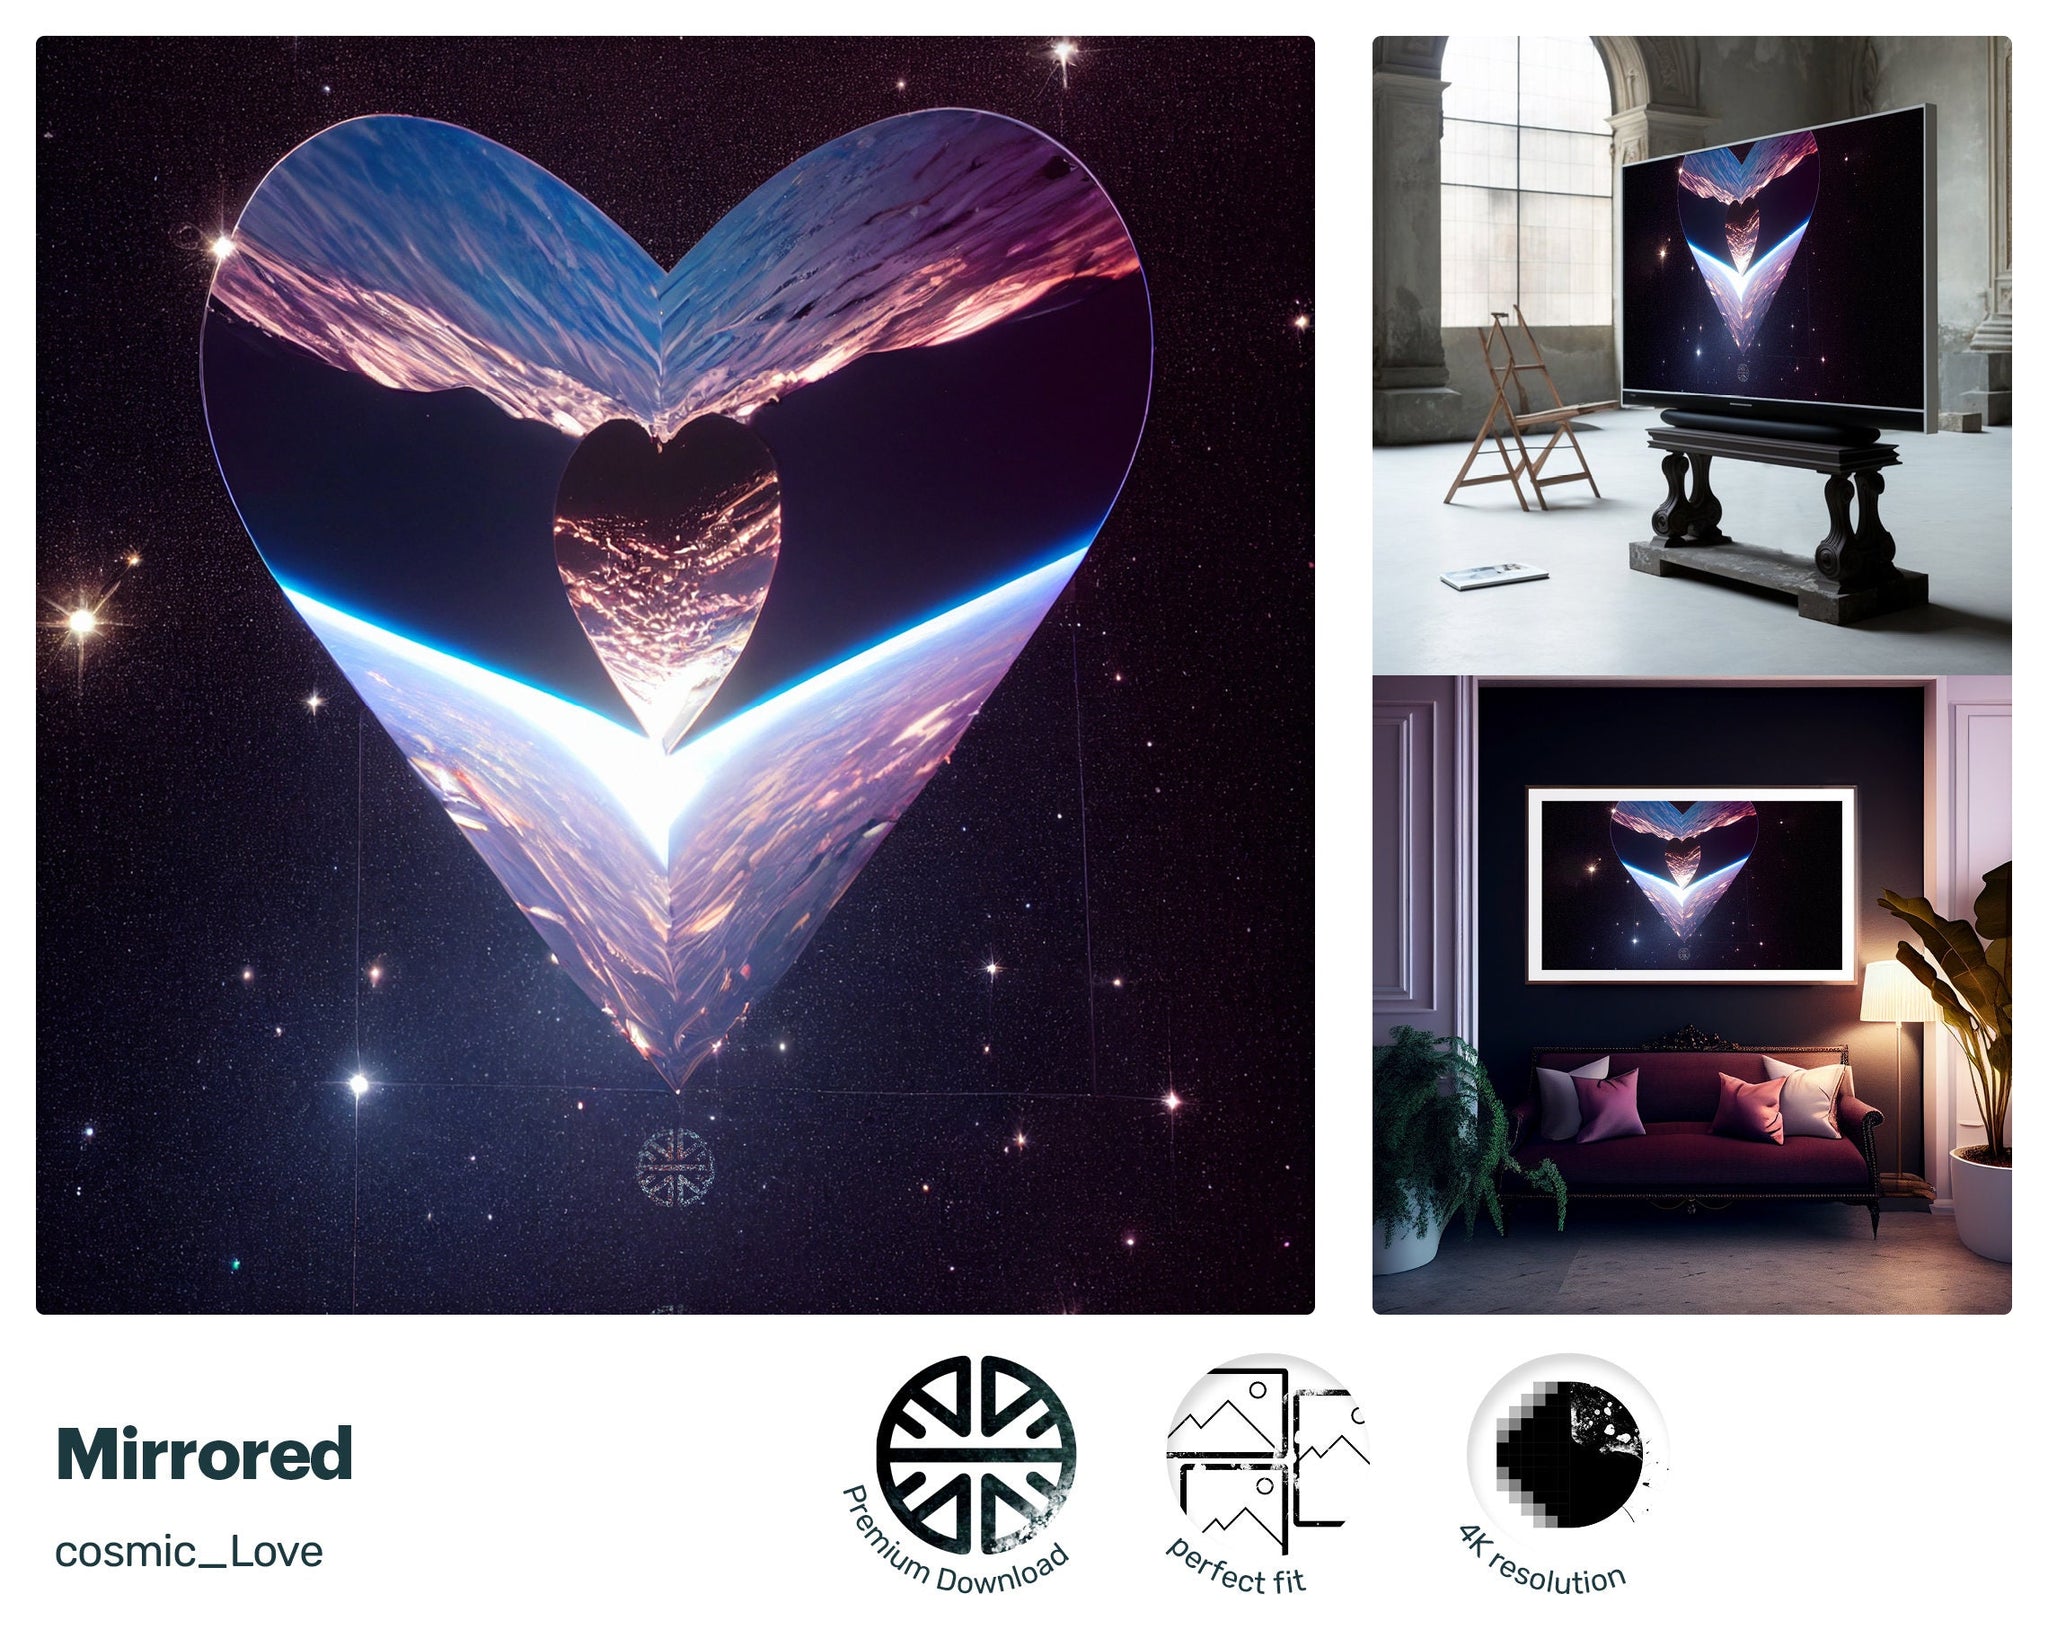 Samsung Frame TV Art, Mirrored, james webb telescope, nerd culture, 2001 Space Odyssey, mens valentines gift